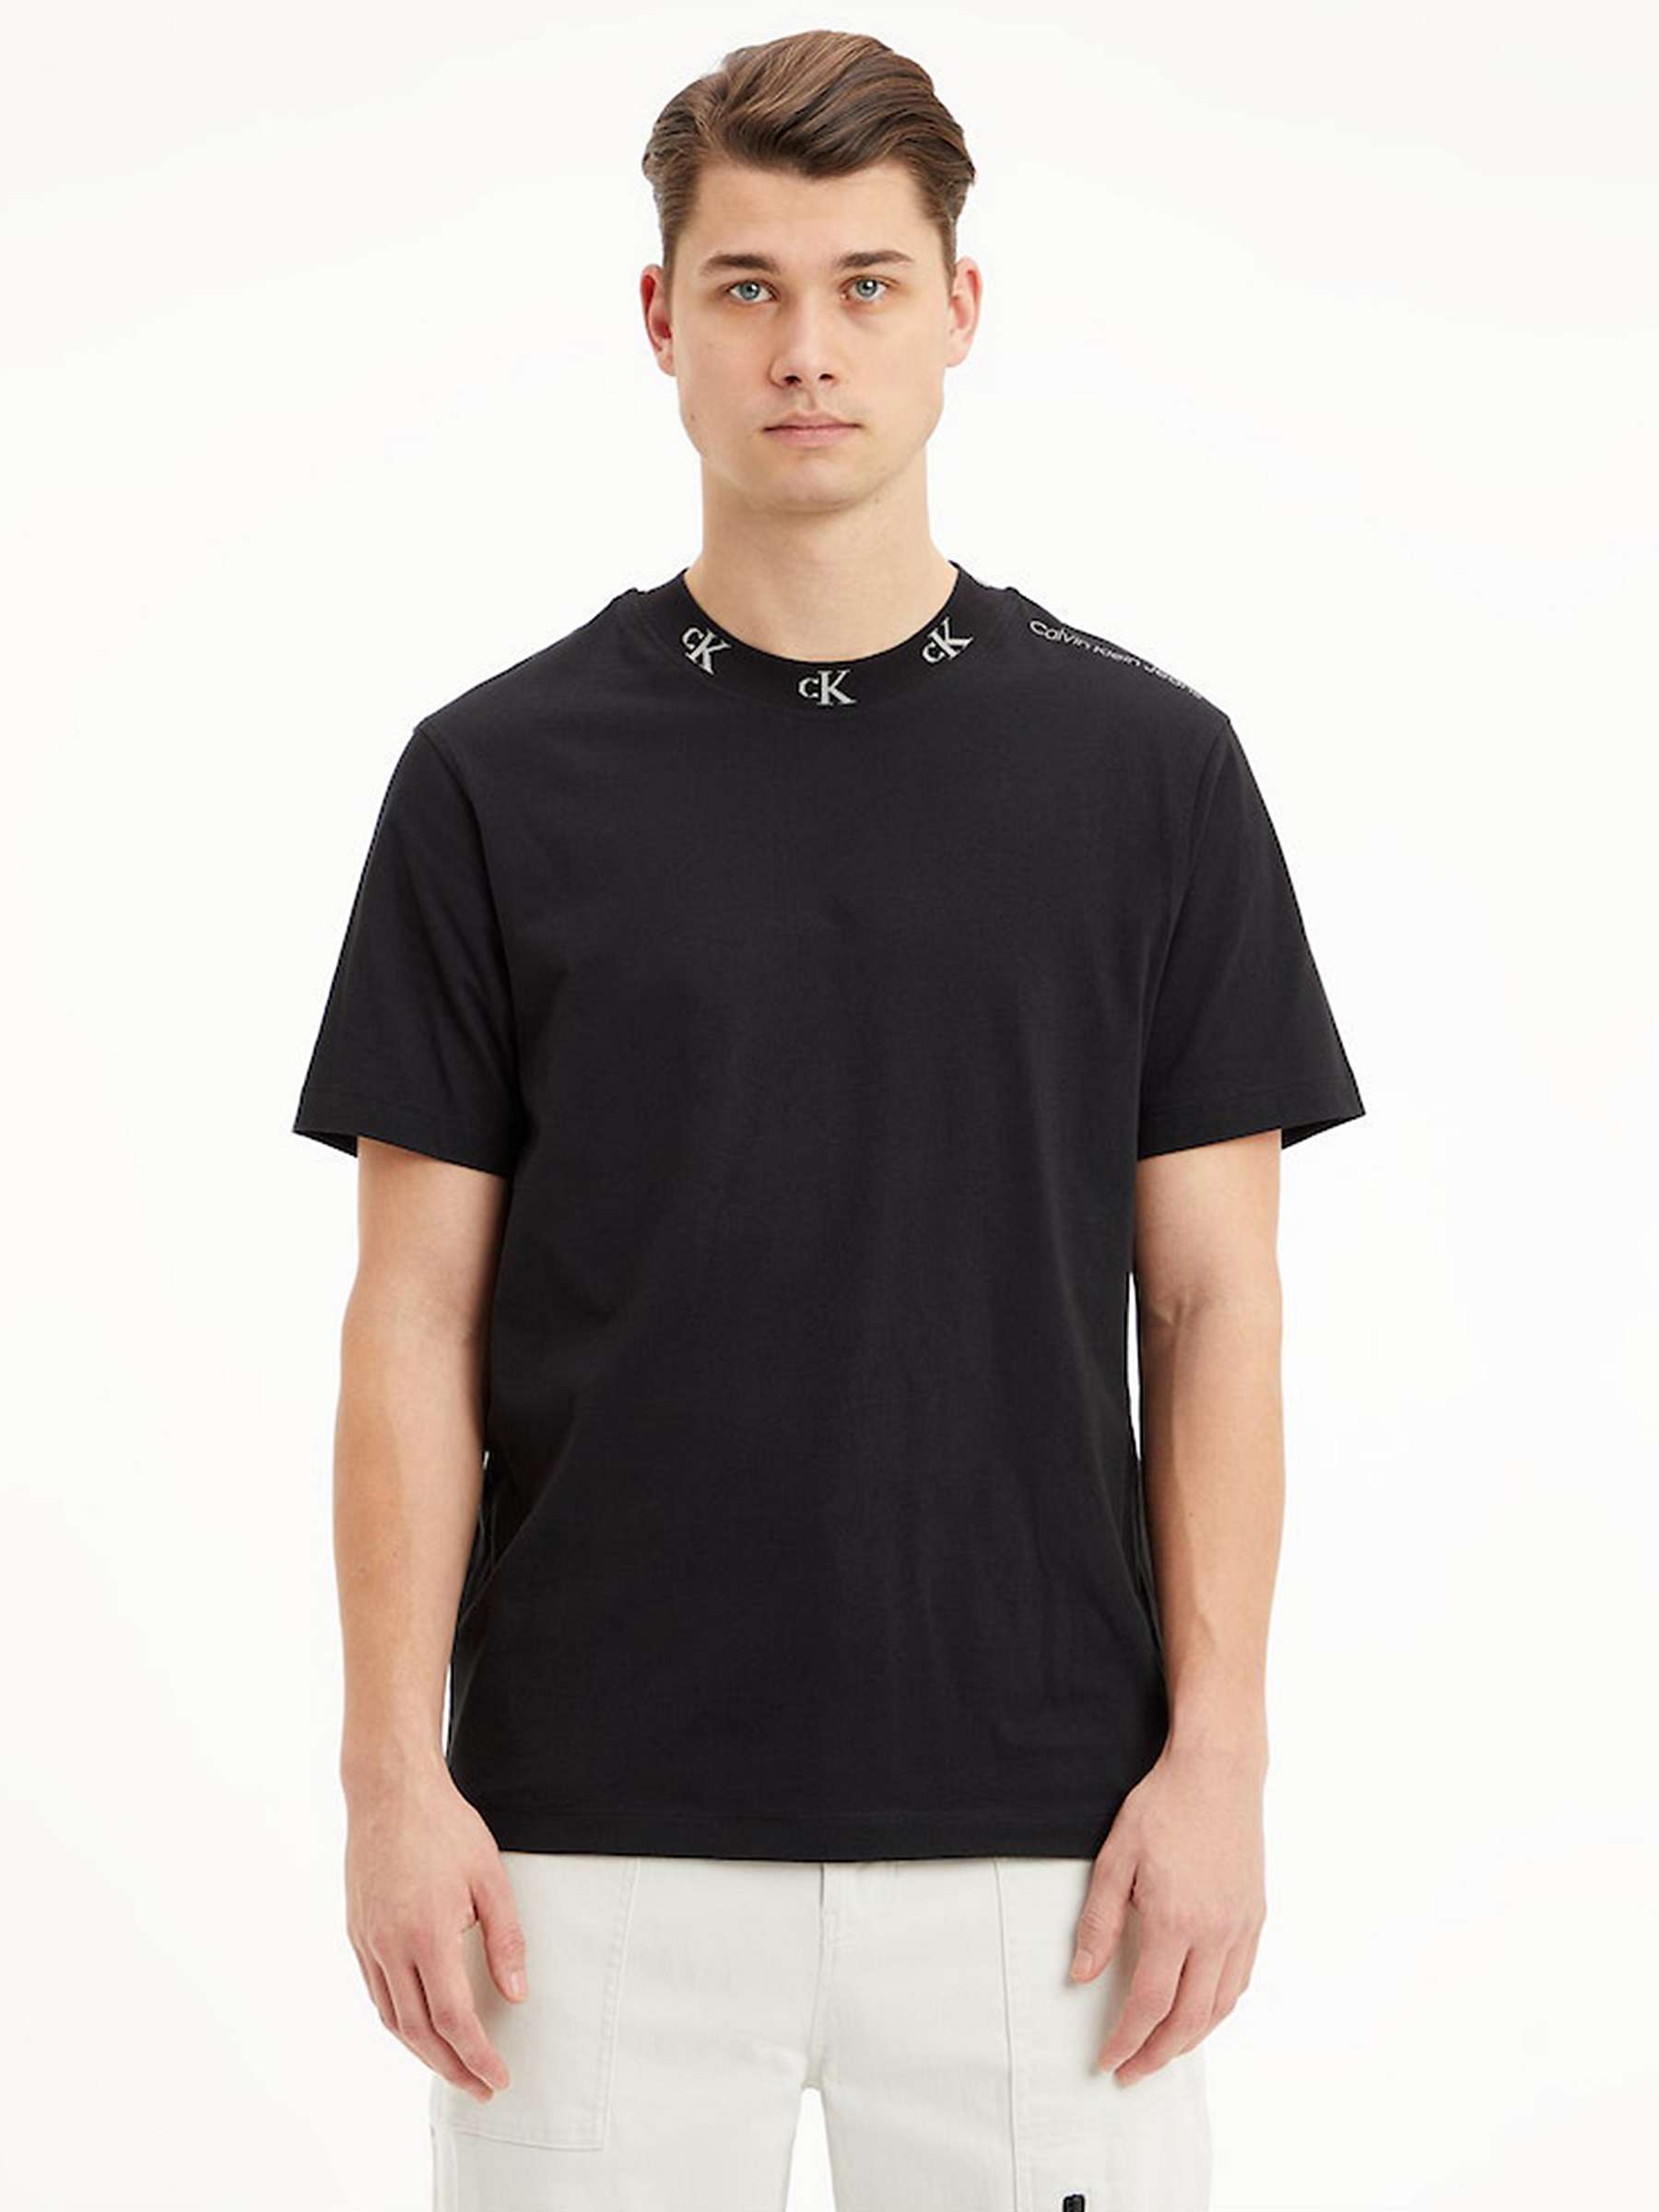 Calvin Klein Jeans Jacquard Logo T-Shirt, CK Black at John Lewis & Partners